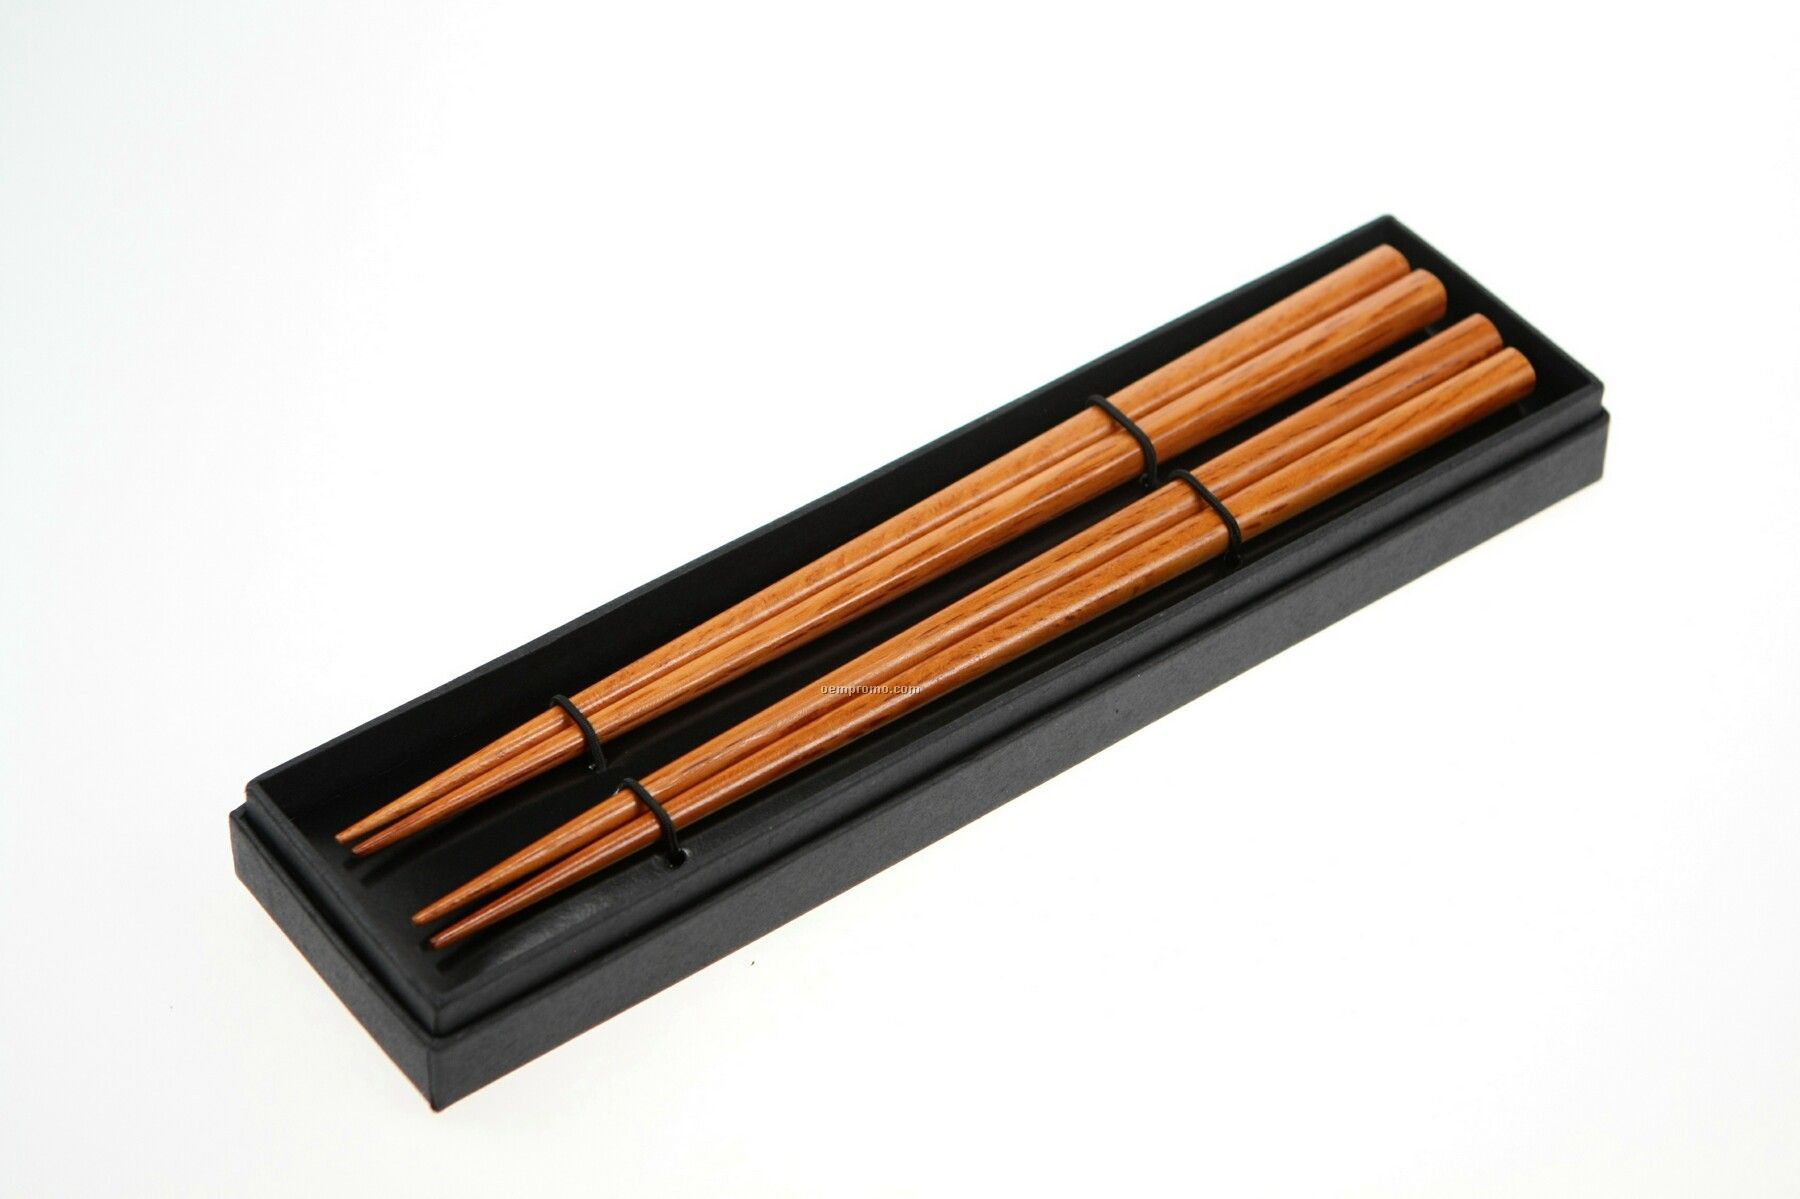 Two Pairs Of Wooden Brown Chopsticks In Black Cardboard Box